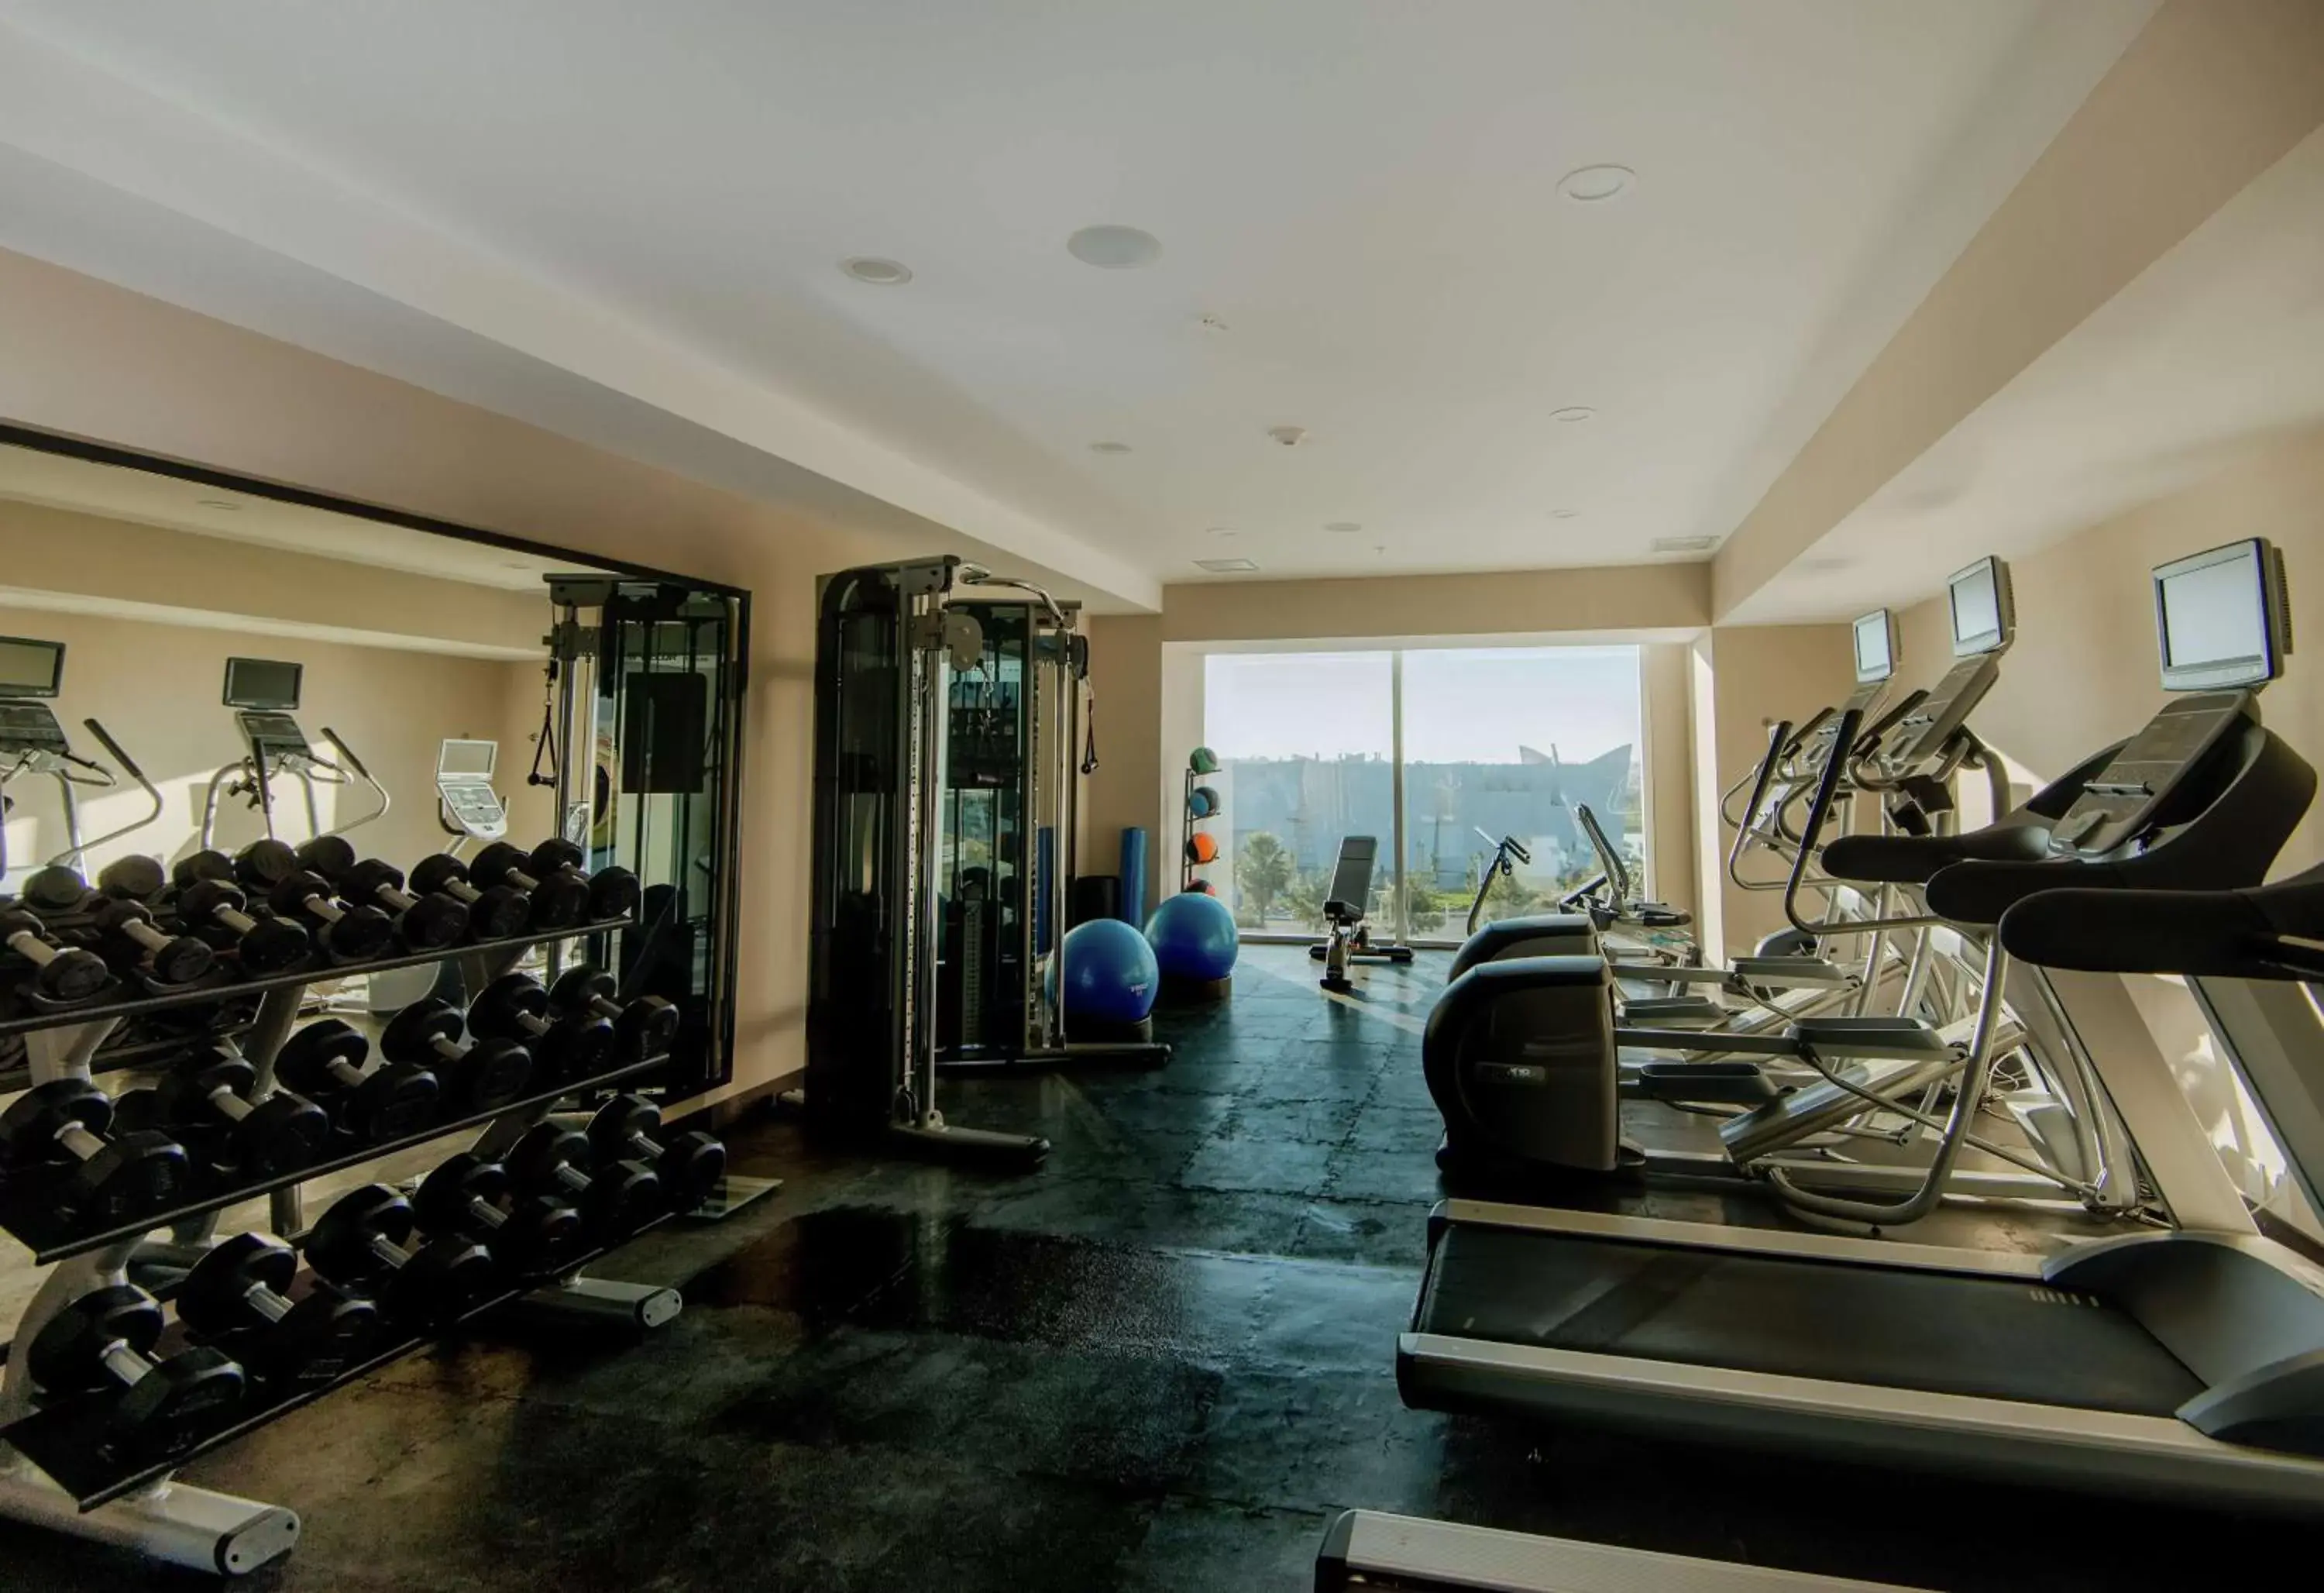 Fitness centre/facilities, Fitness Center/Facilities in Hilton Garden Inn Puebla Angelopolis